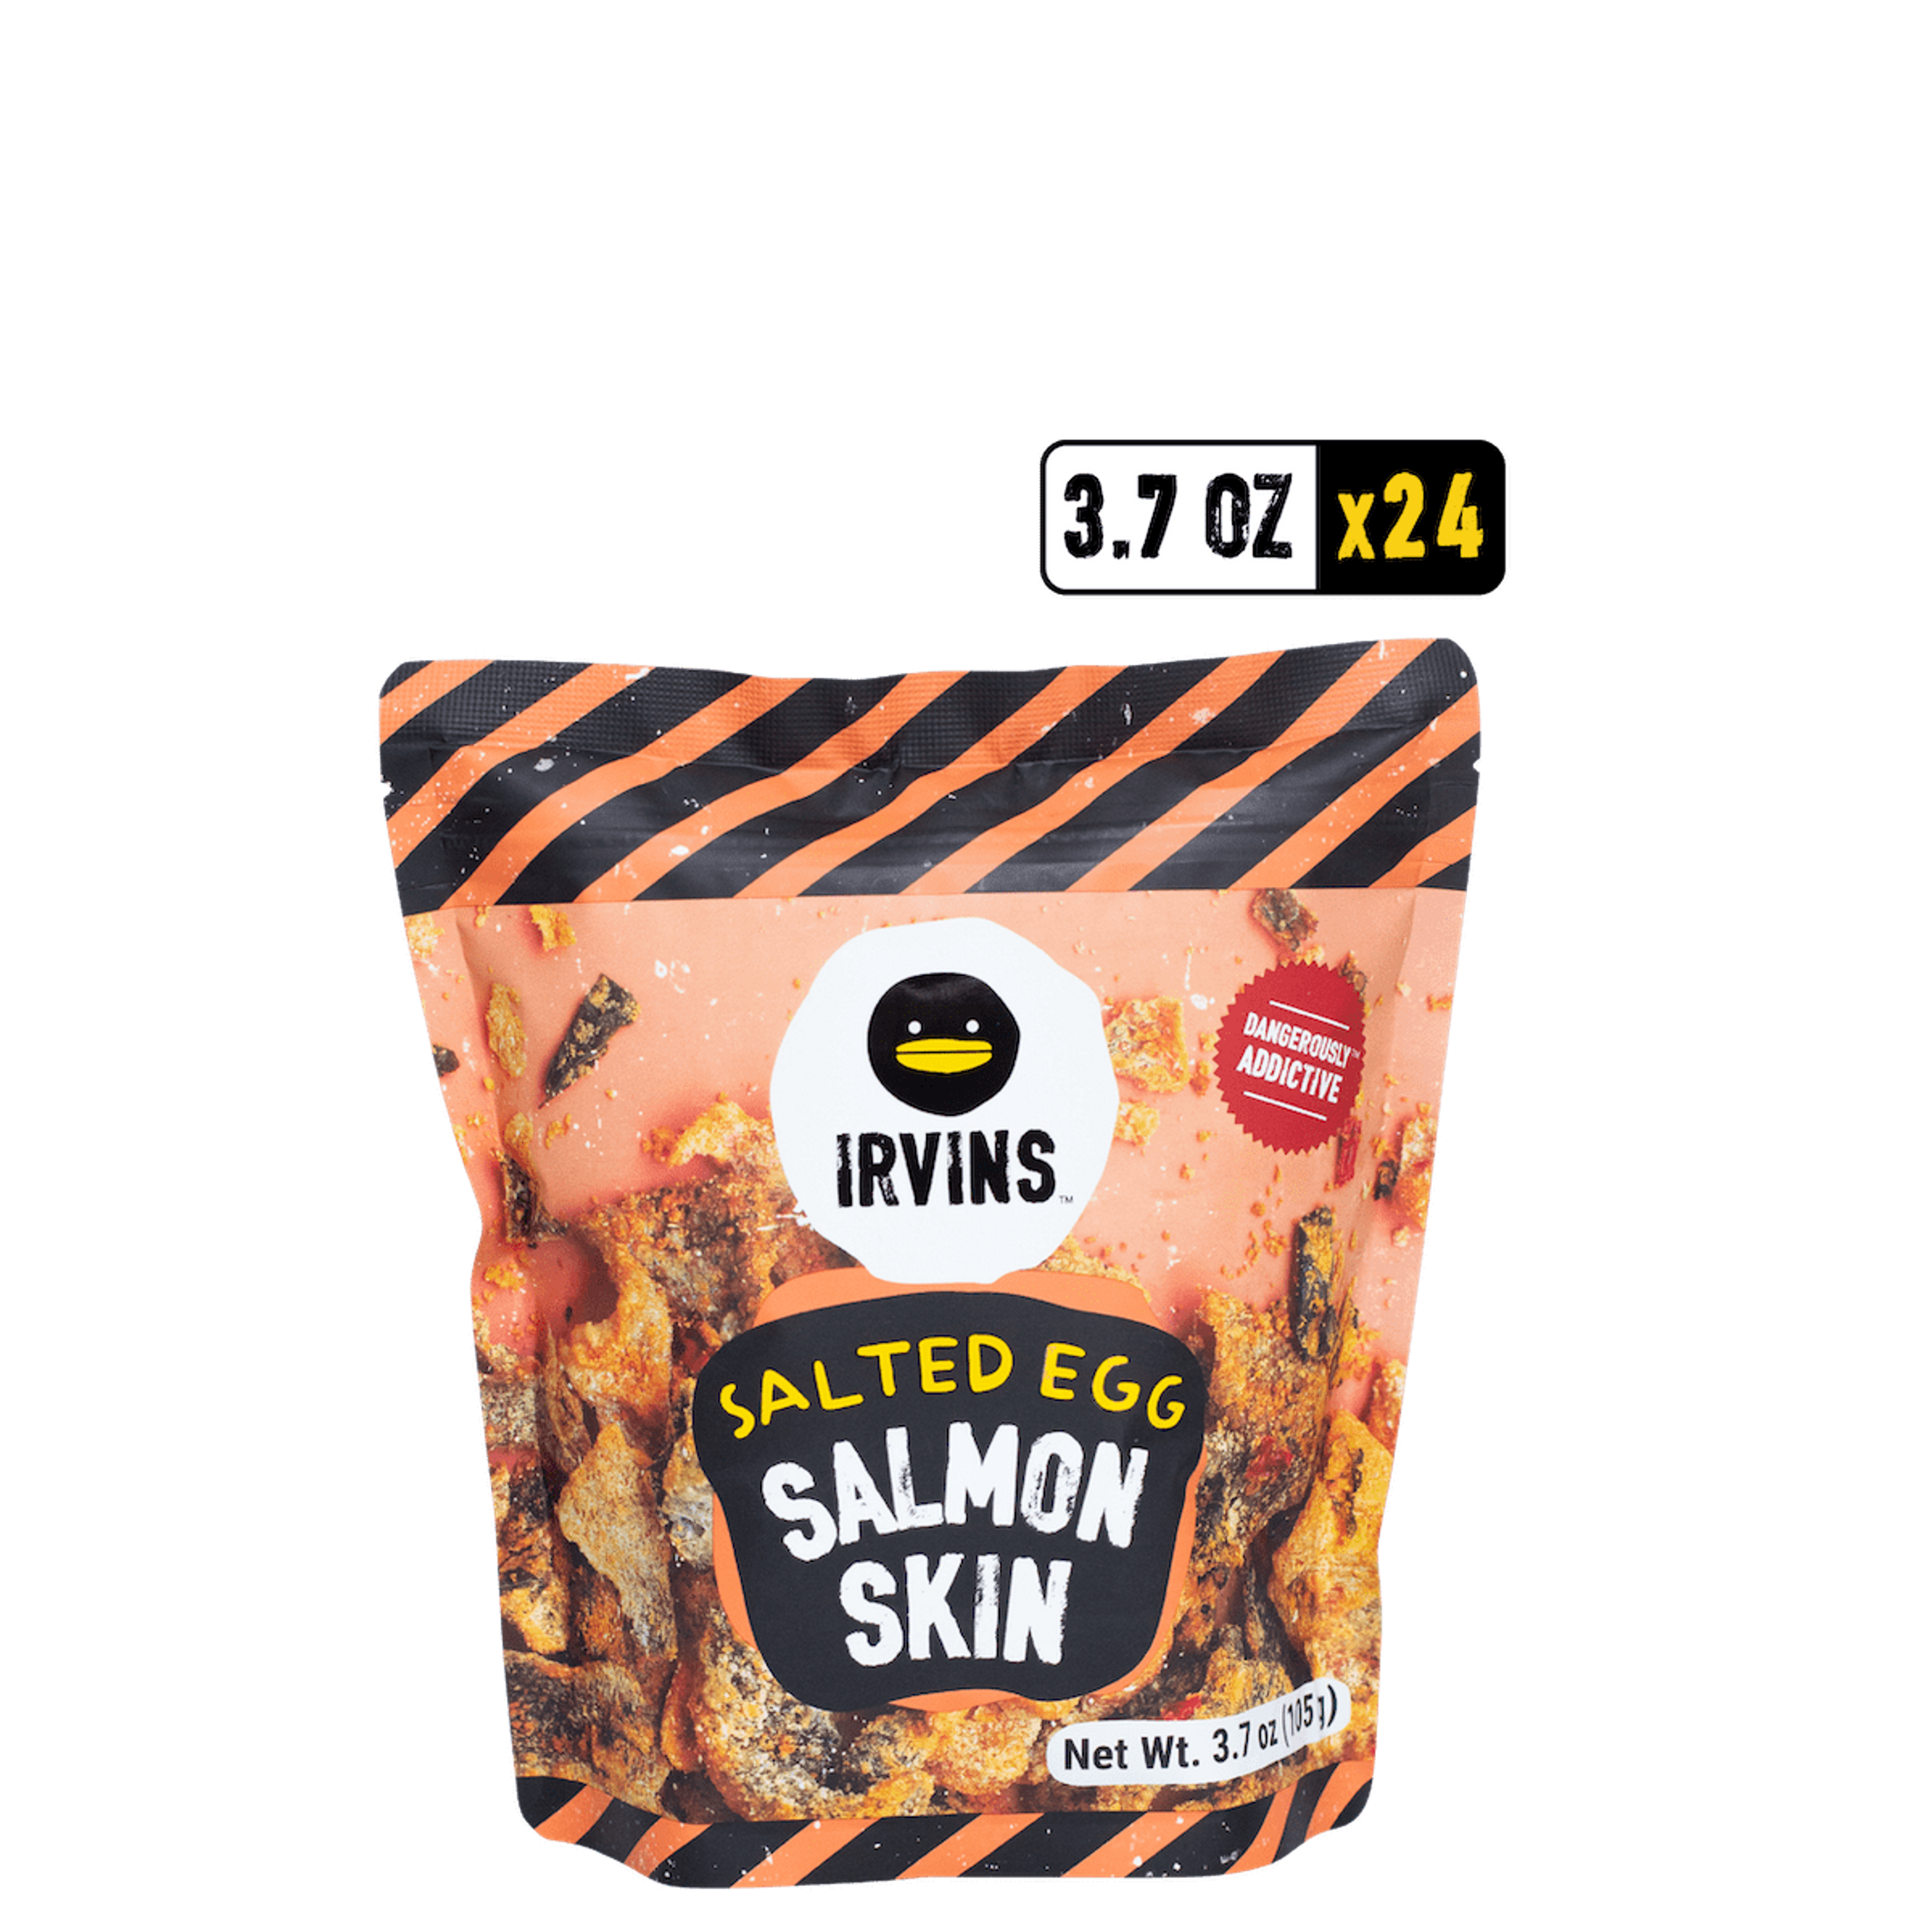 Salted Egg Salmon Skin 24-Pack (3.7oz)